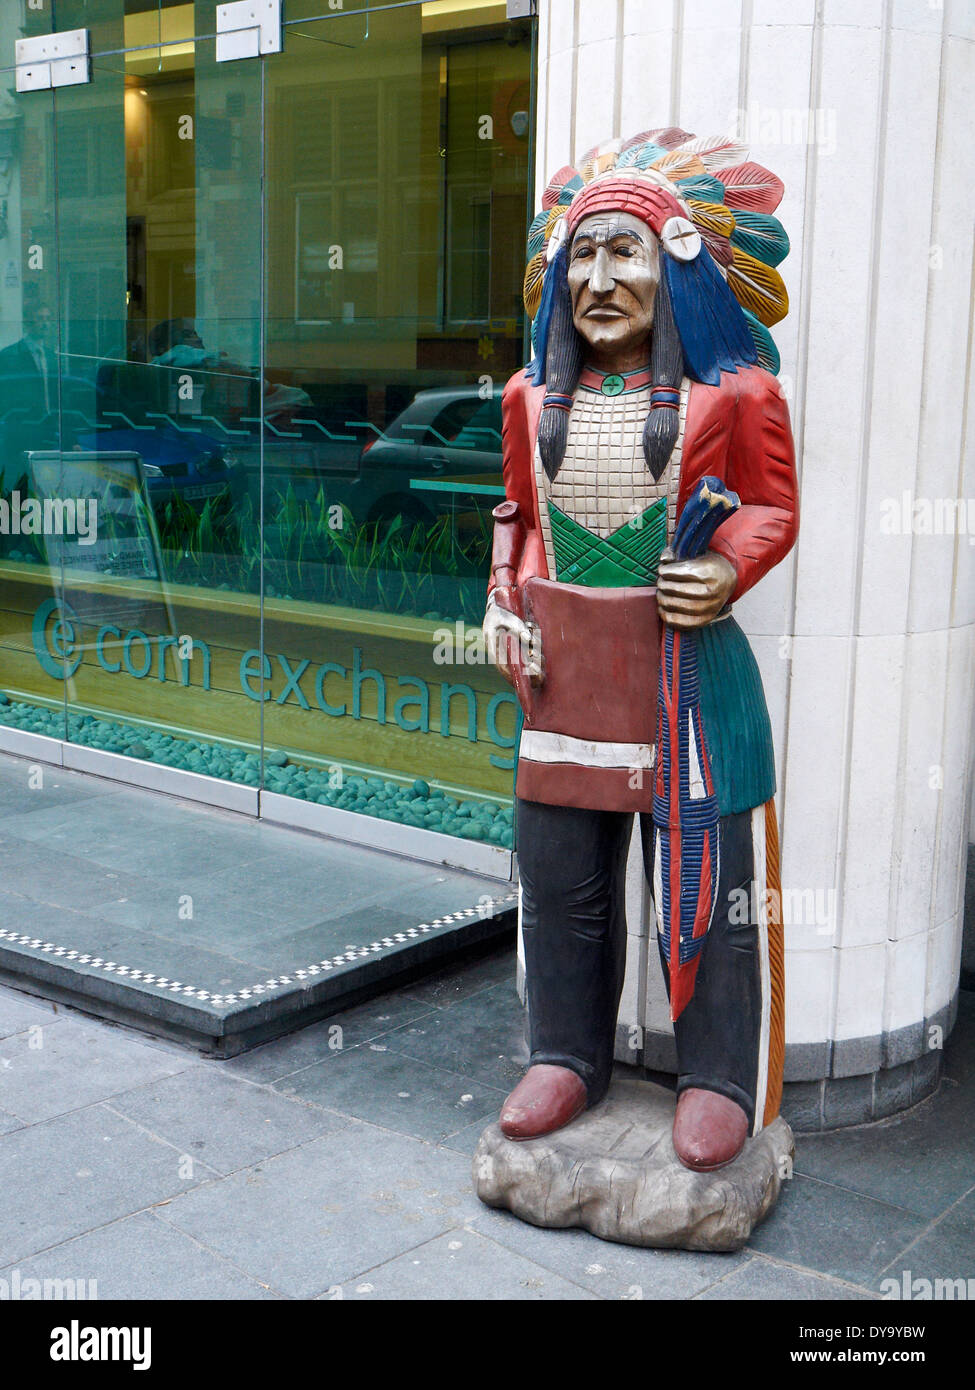 Indische Statue außerhalb Trafik in Liverpool Merseyside UK Stockfoto